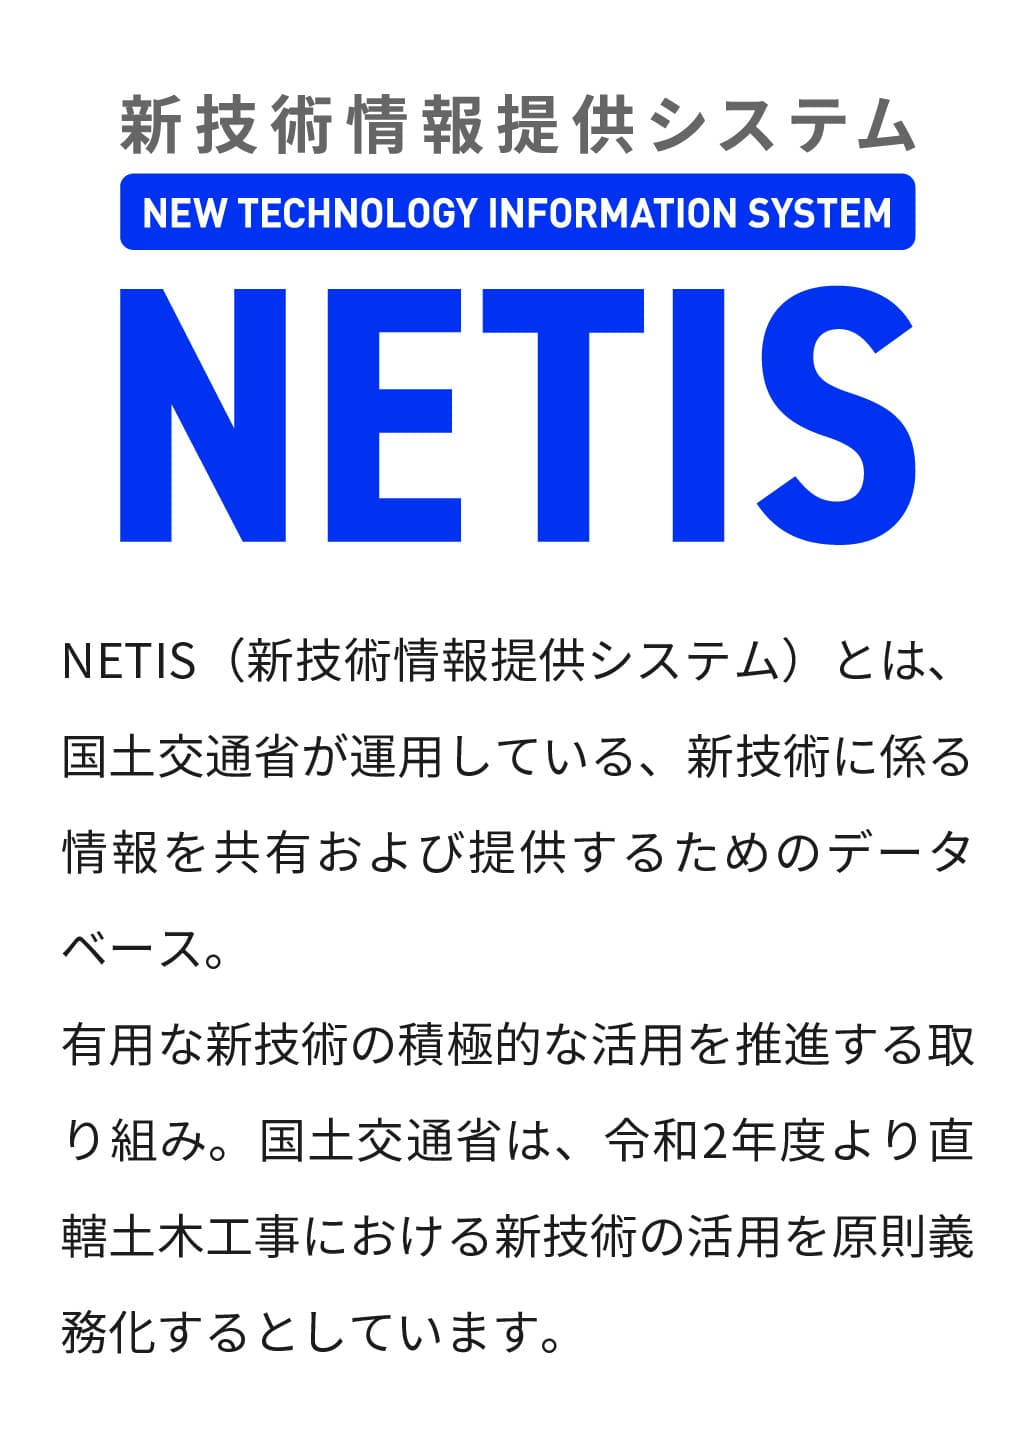 NETIS（新技術情報提供システム）とは、国土交通省が運用している、新技術に係る情報を共有および提供するためのデータベース。有用な新技術の積極的な活用を推進する取り組み。国土交通省は、令和2年度より直轄土木工事における新技術の活用を原則義務化するとしています。